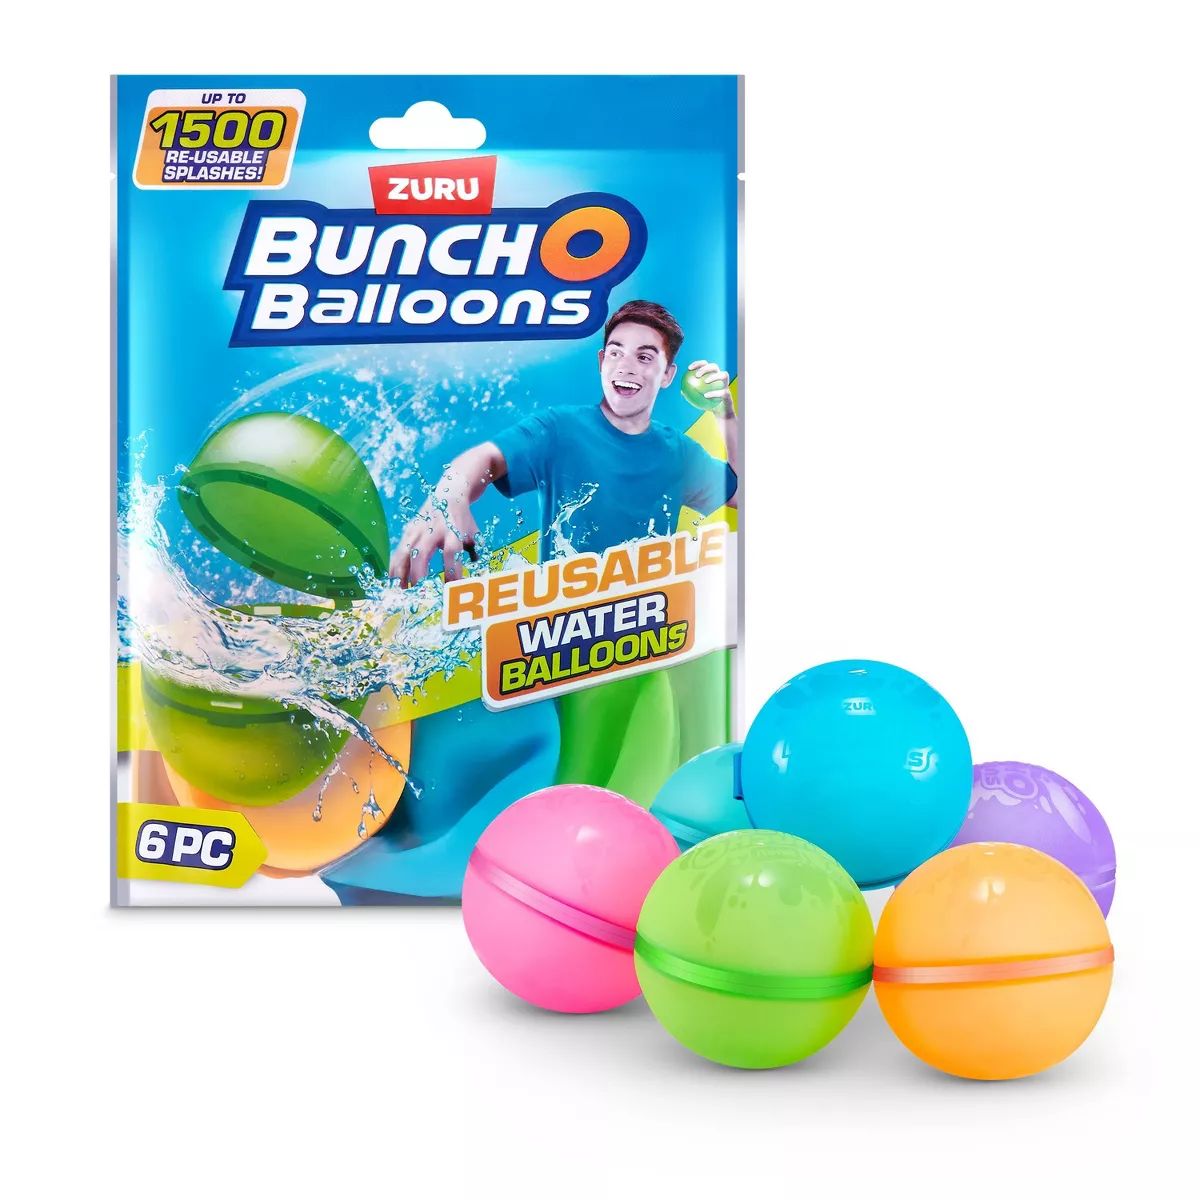 Bunch O Balloons Reusable Water Balloons - 6pk | Target